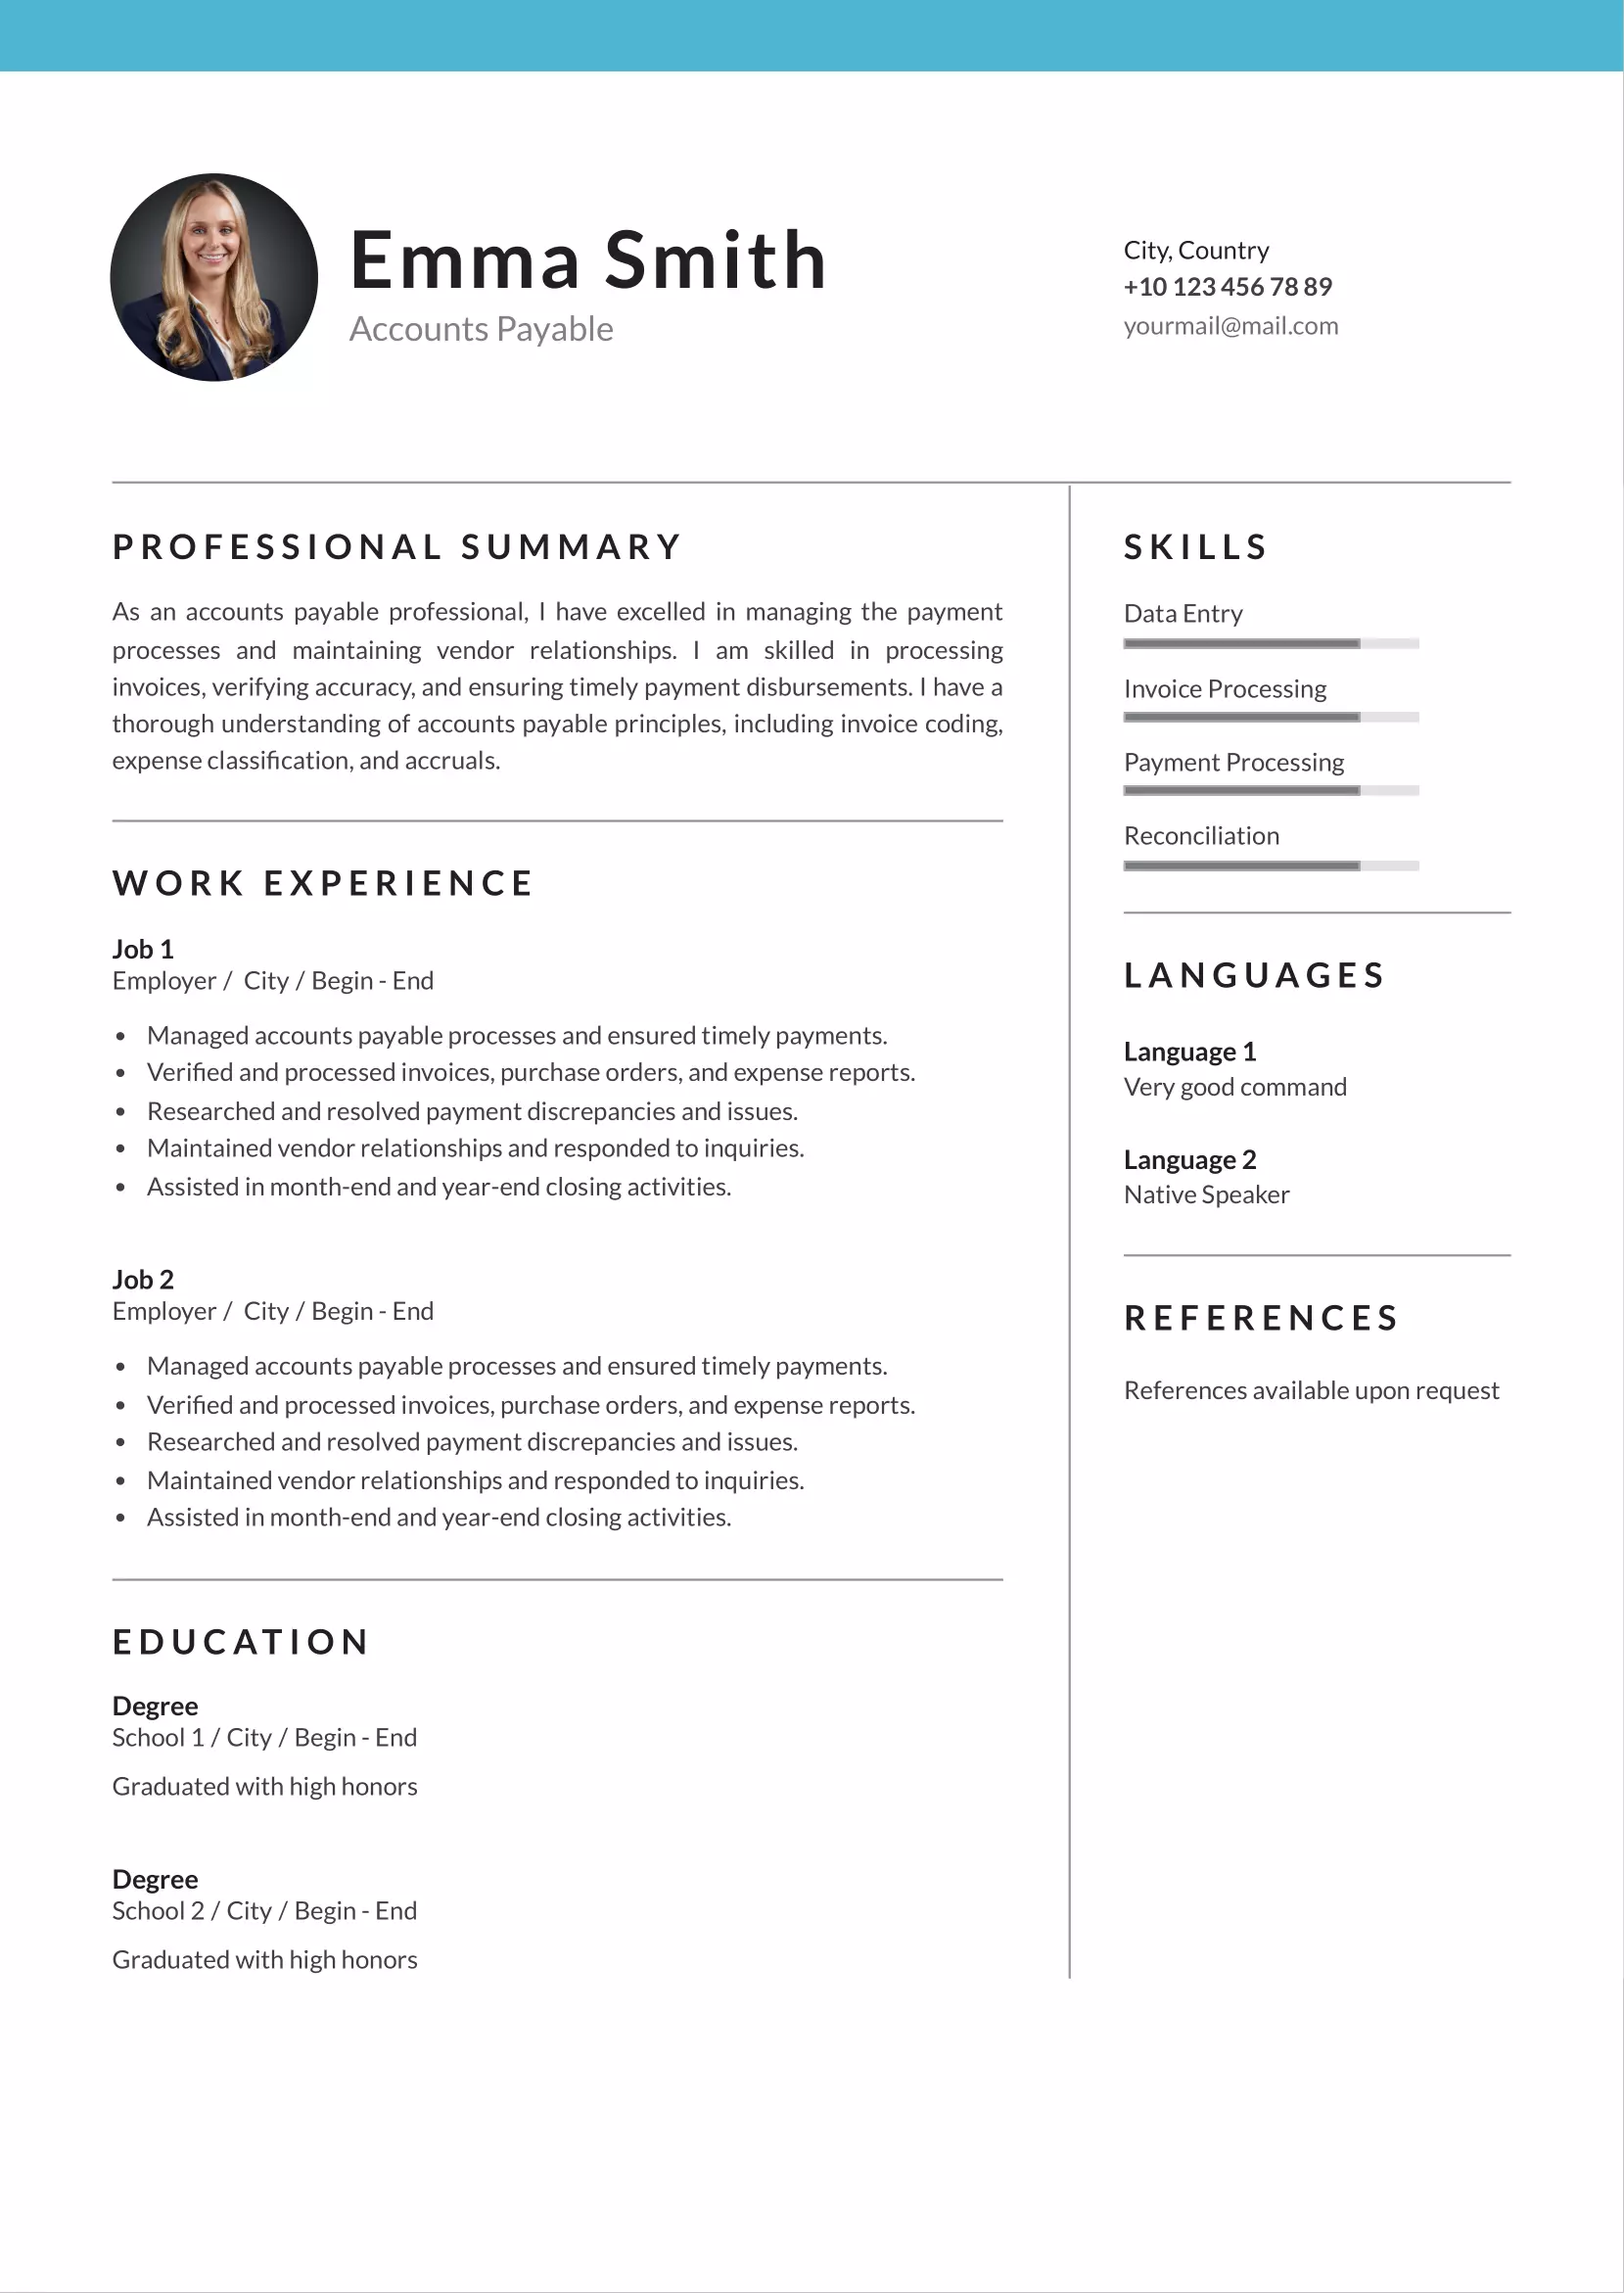 Accounts payable resume CV